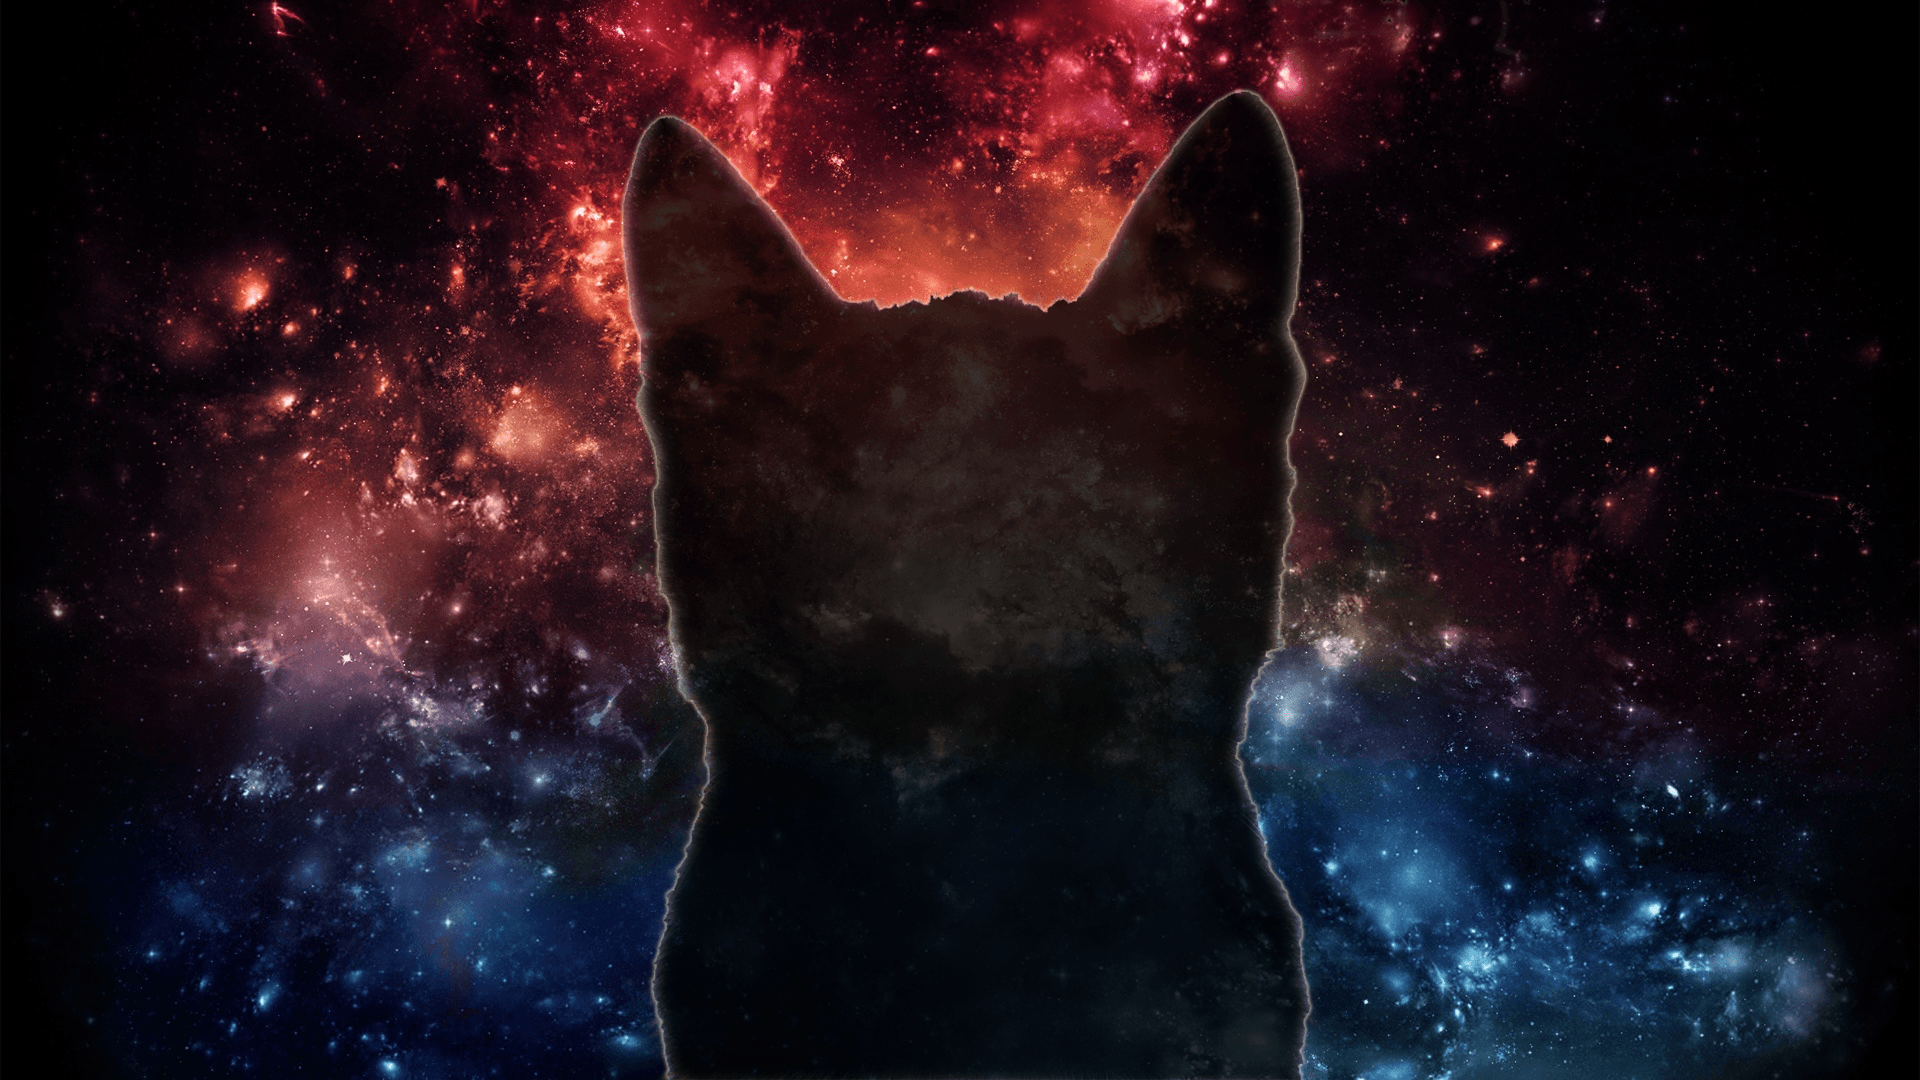 Galaxy Cat 4K wallpaper download